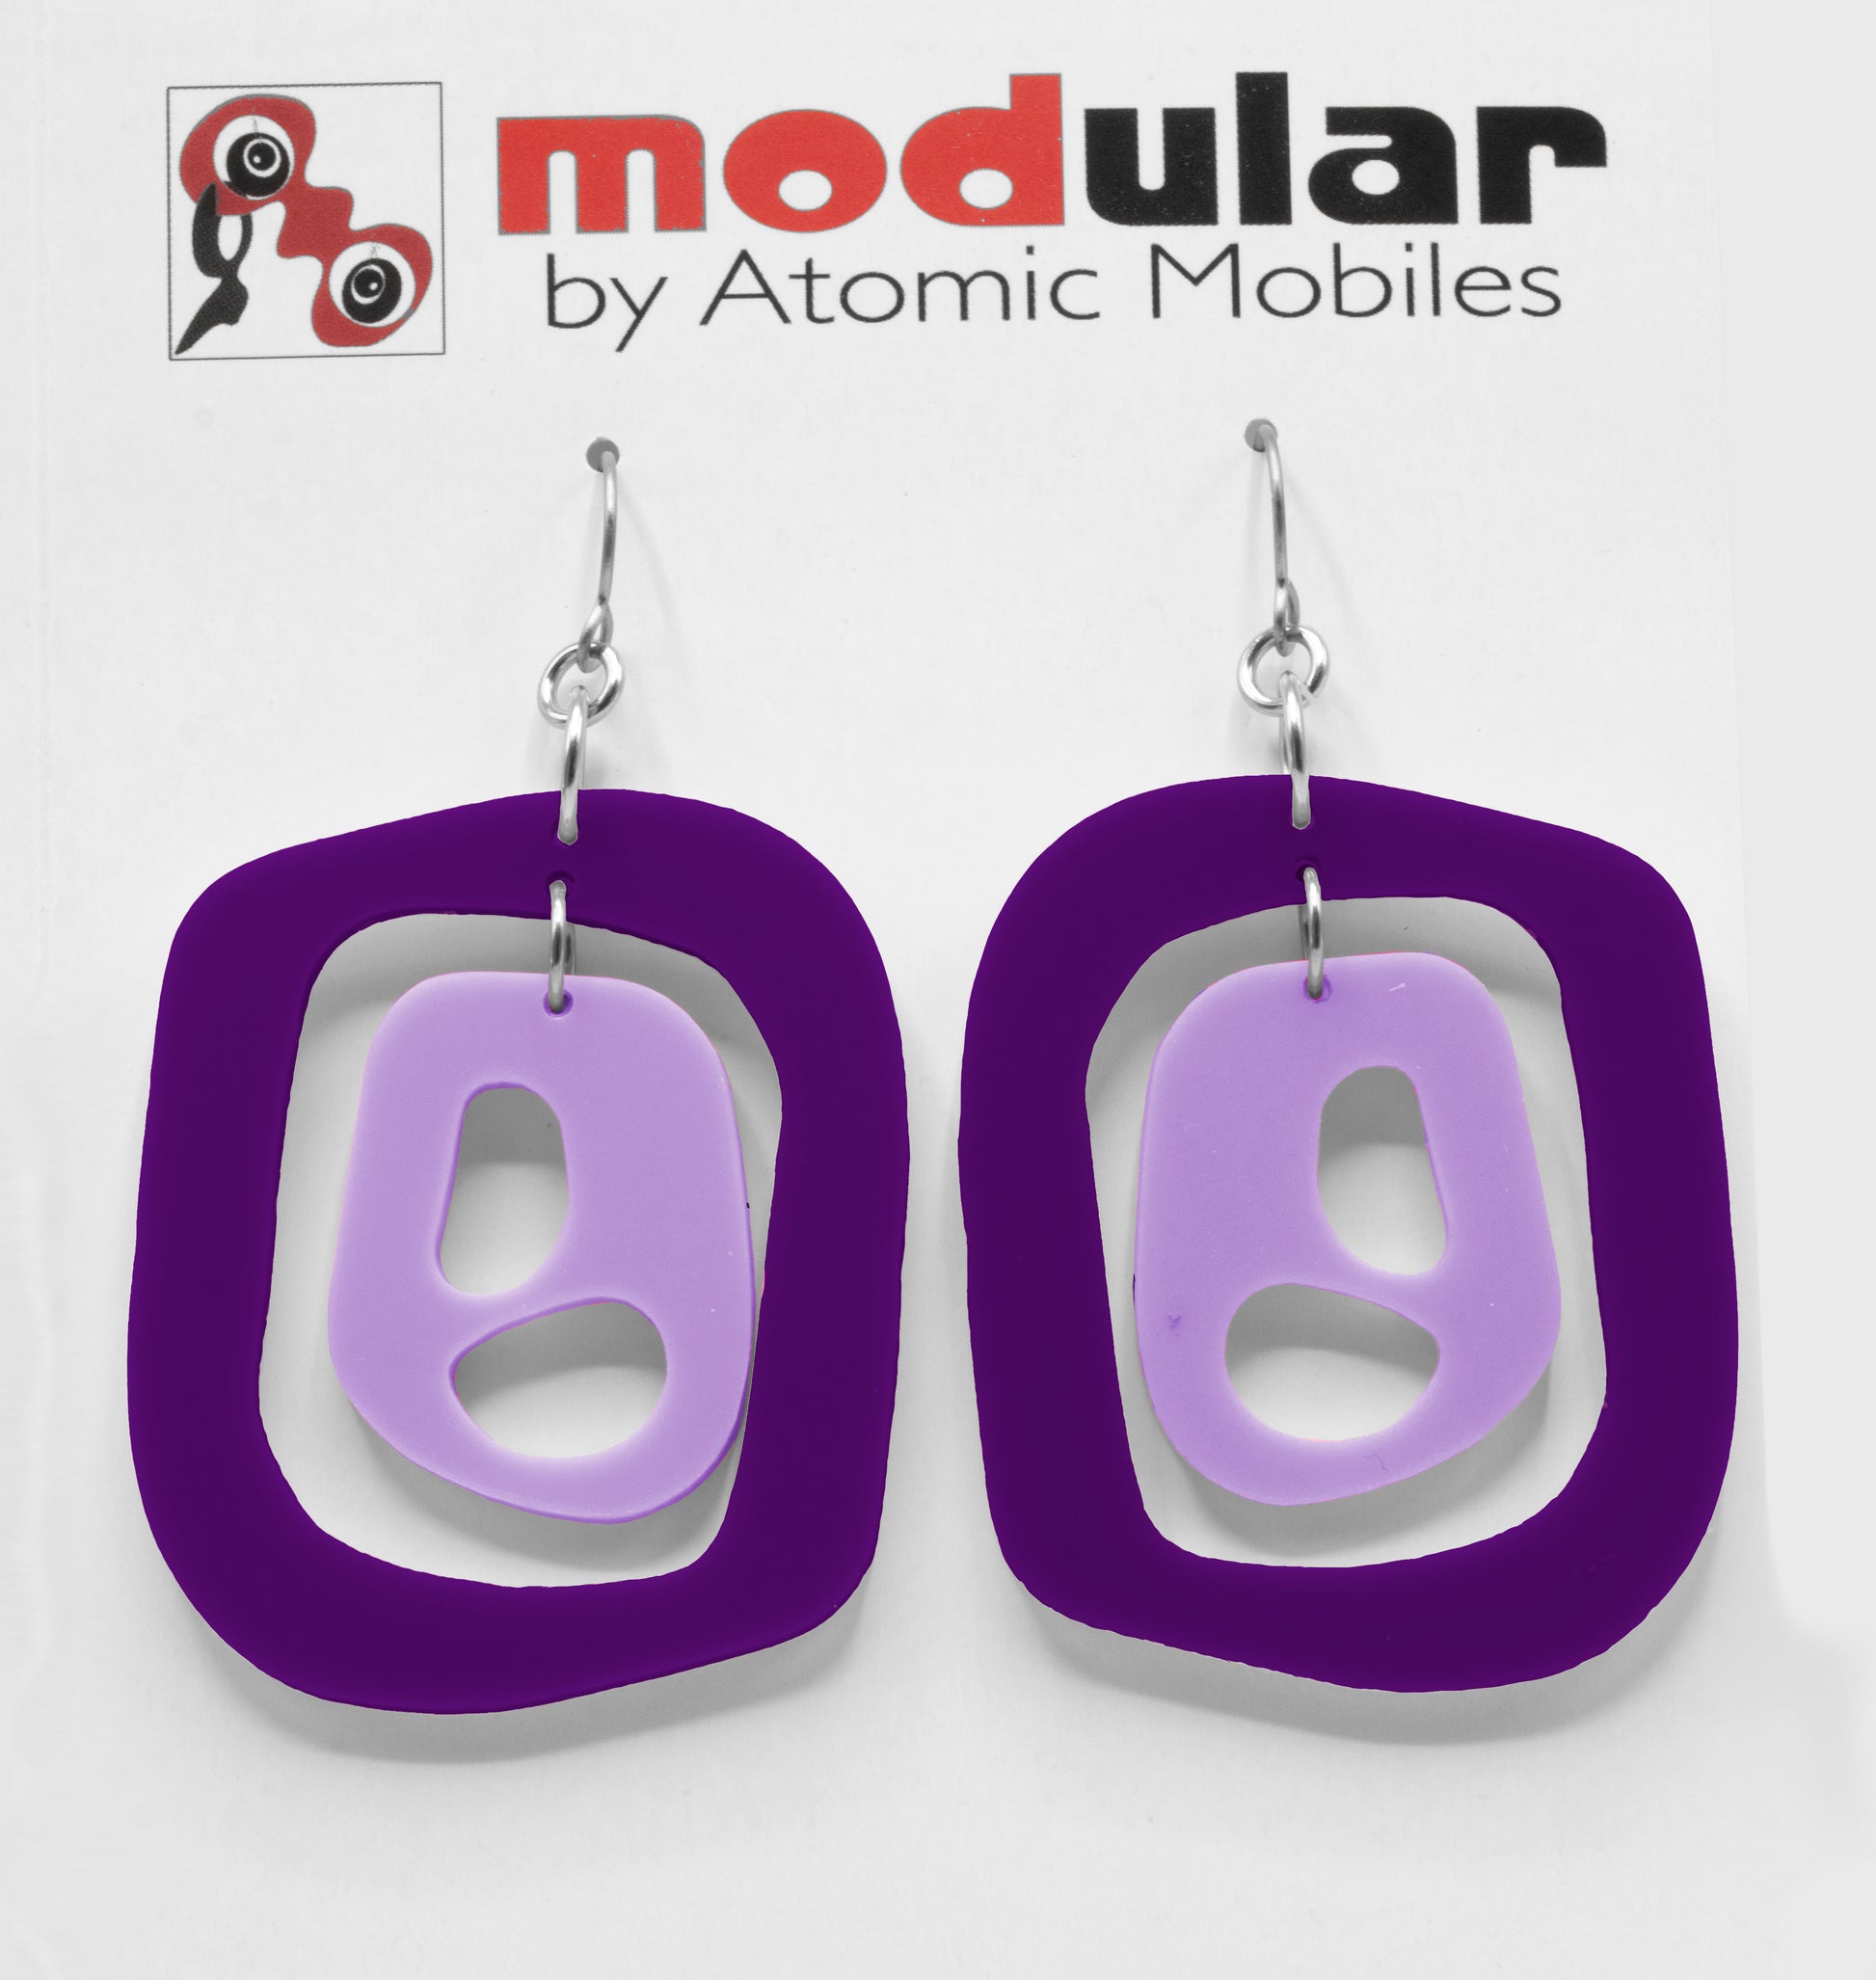 MODular Earrings - Mid 20th Statement Earrings in Purple by AtomicMobiles.com - retro era mod handmade jewelry